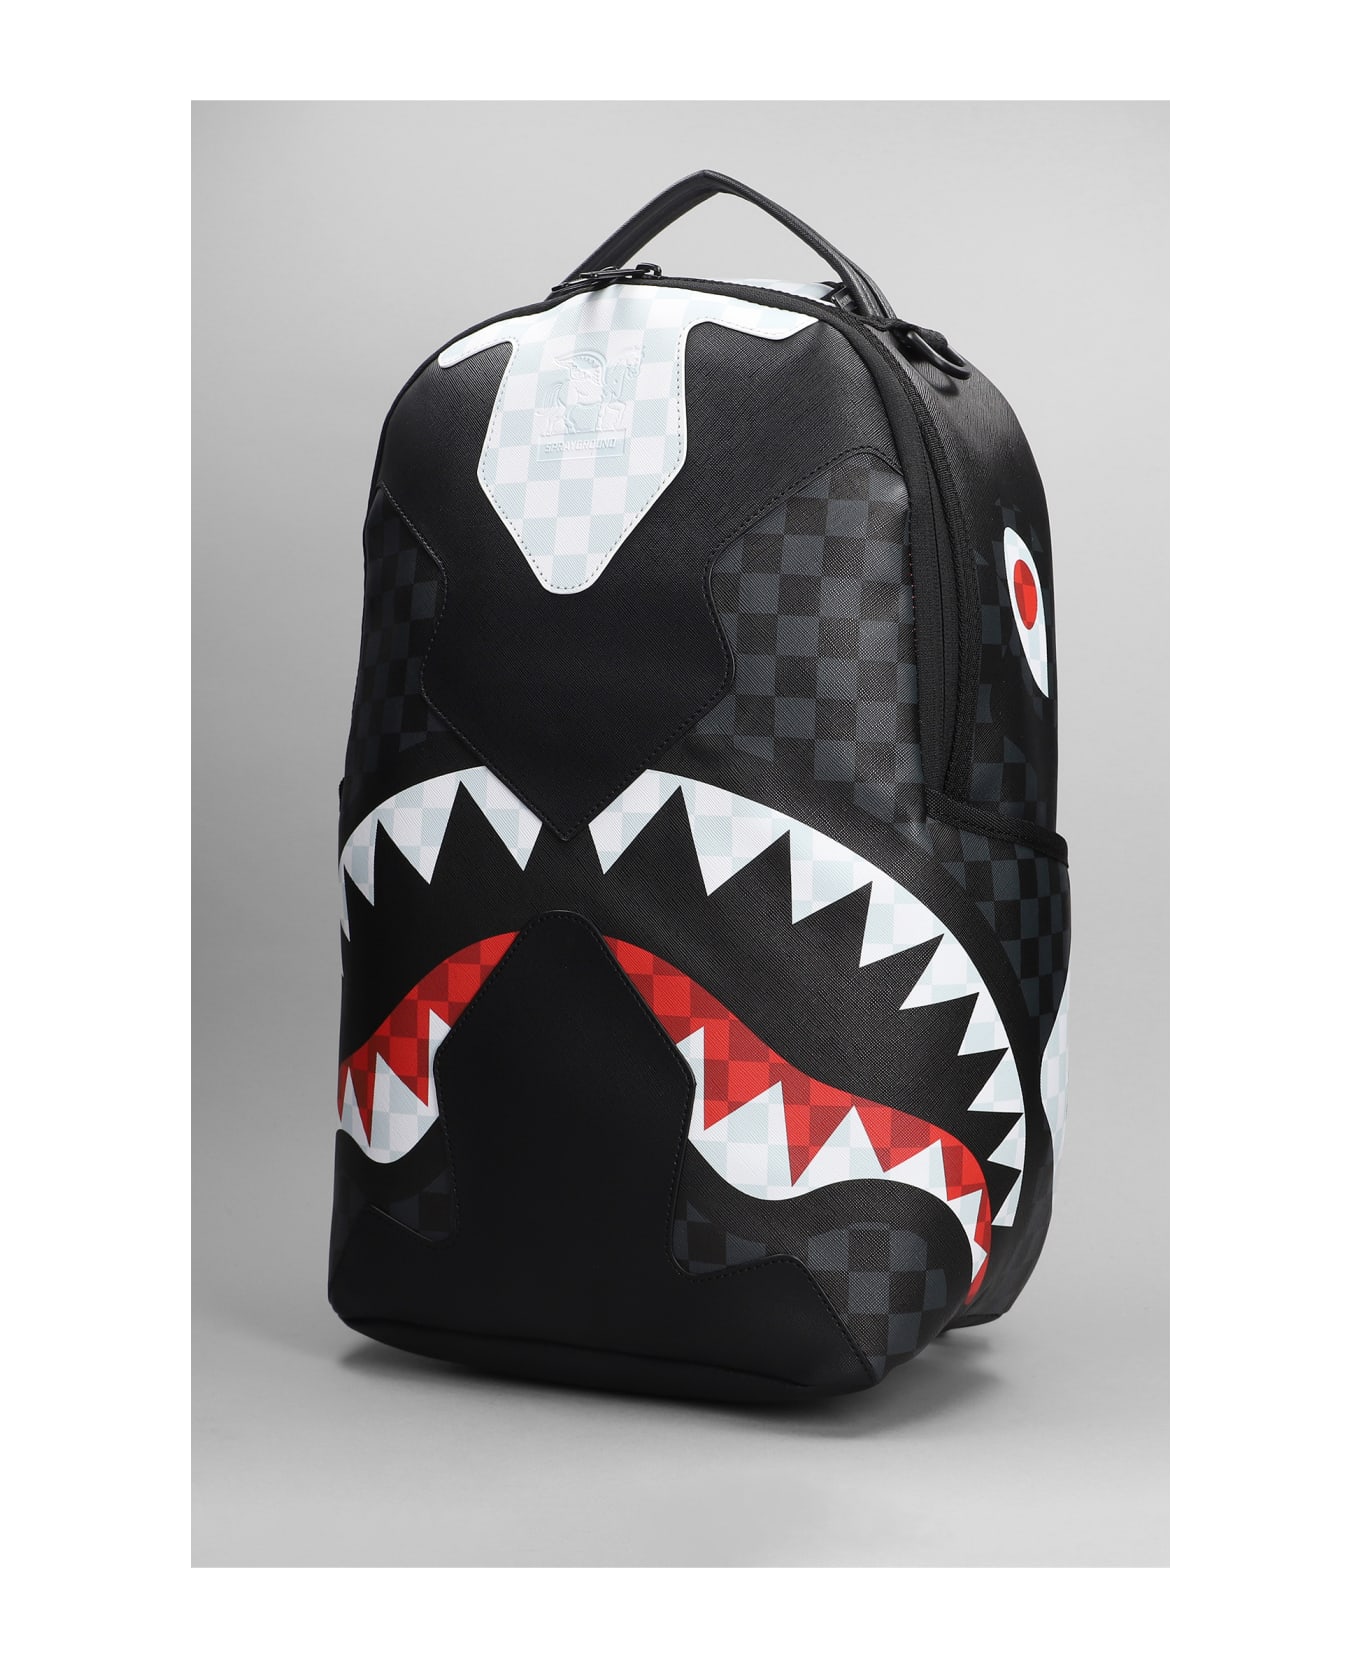 Sprayground Backpack In Black Pvc - Black バックパック